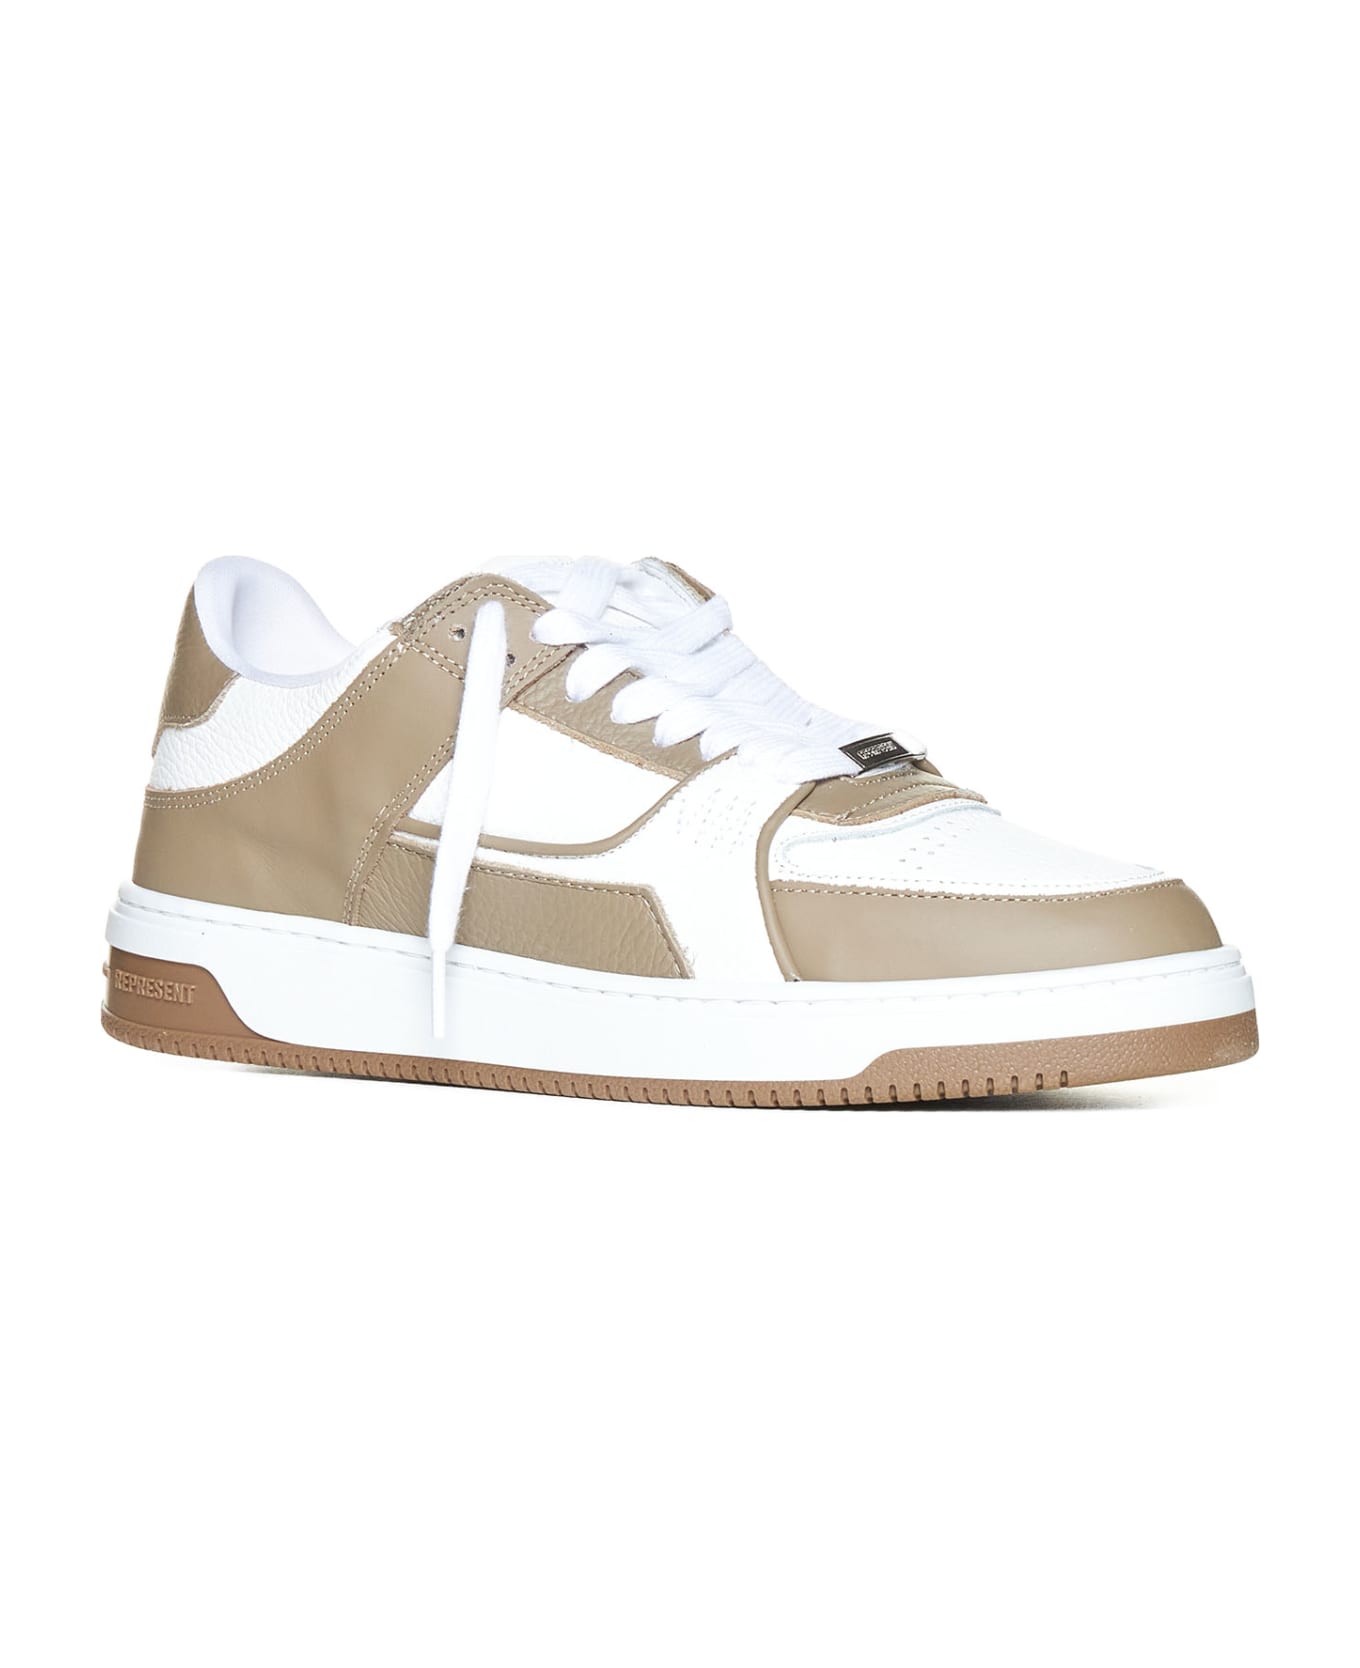 REPRESENT Sneakers - Hazel flat white スニーカー